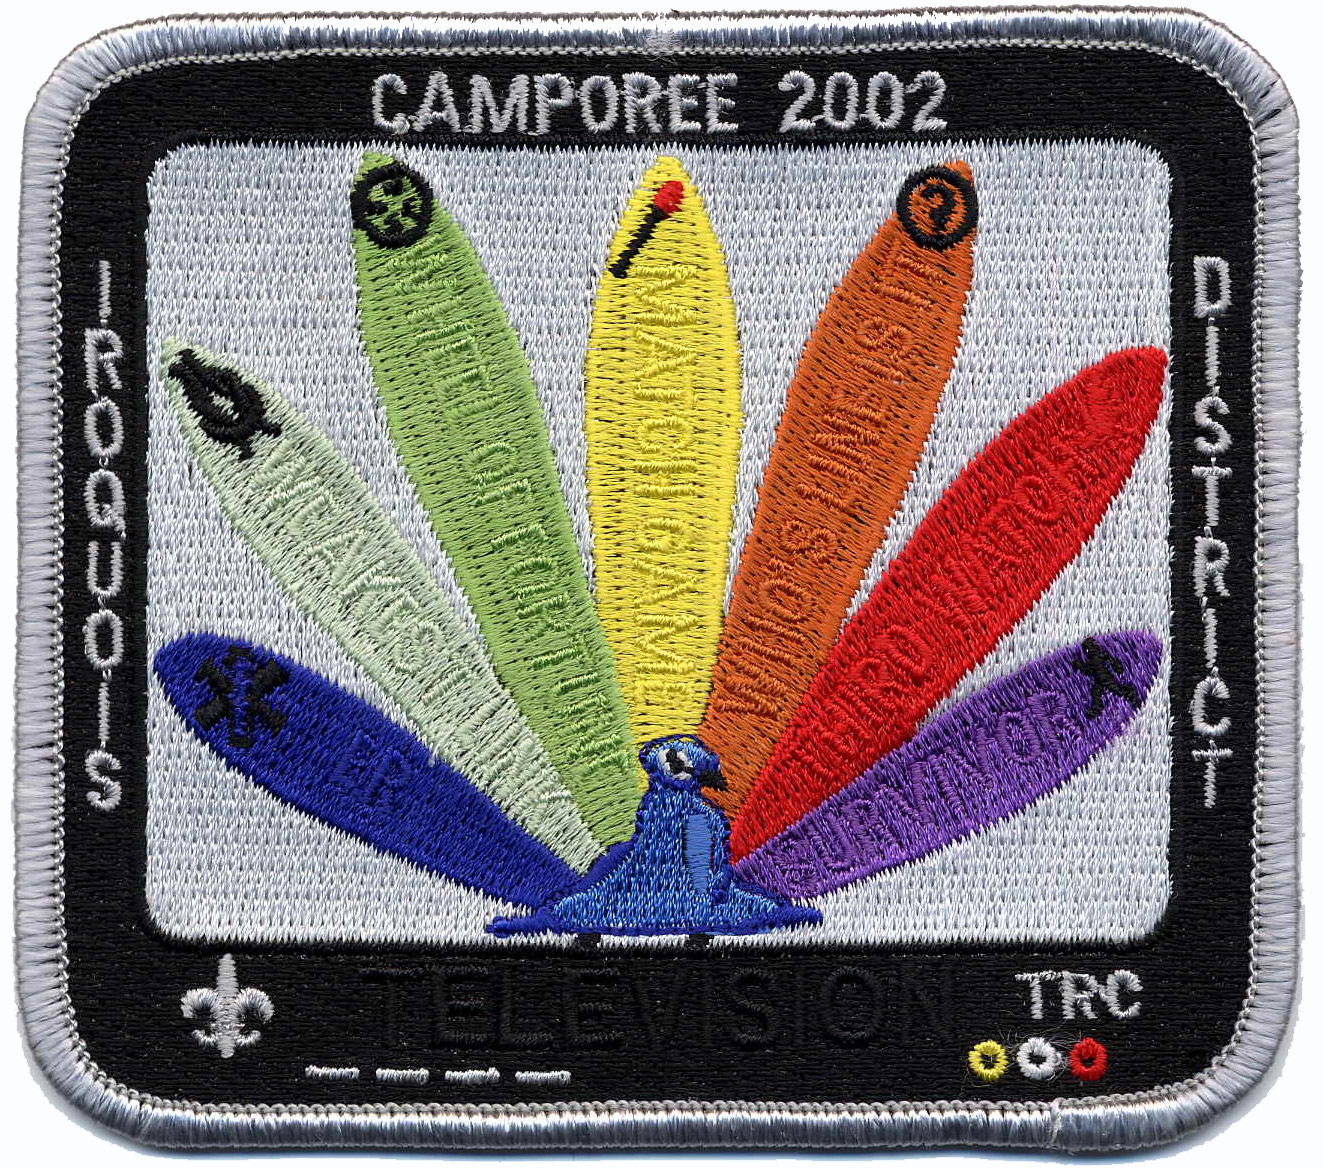 Iroquois 2002 Camporee